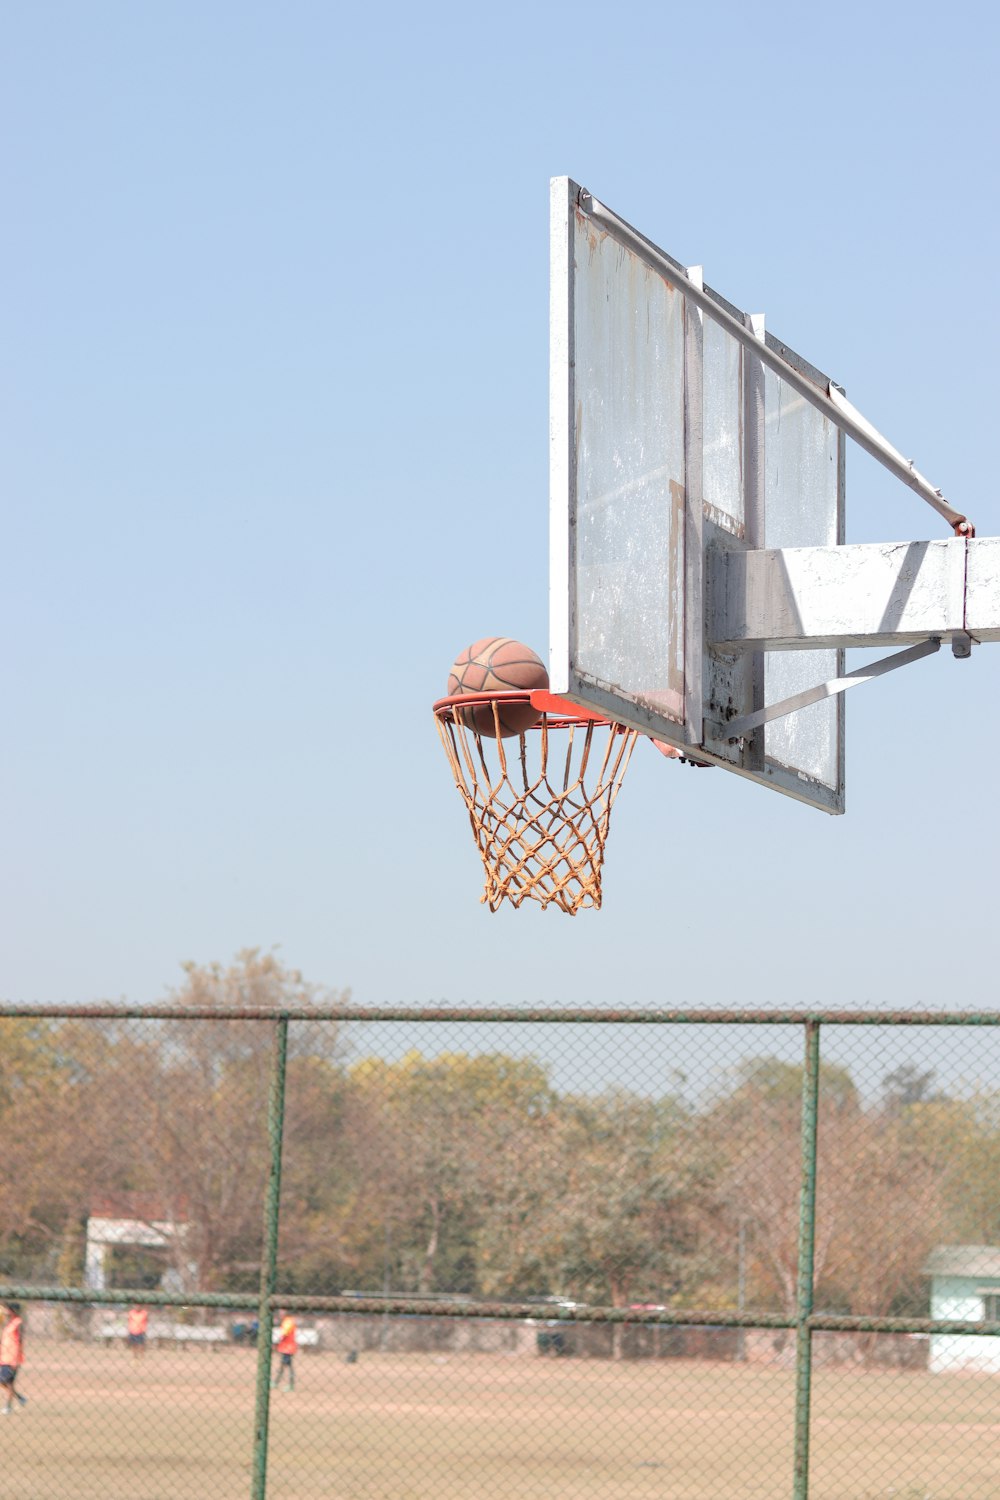 a basketball going through the hoop on a basketball court